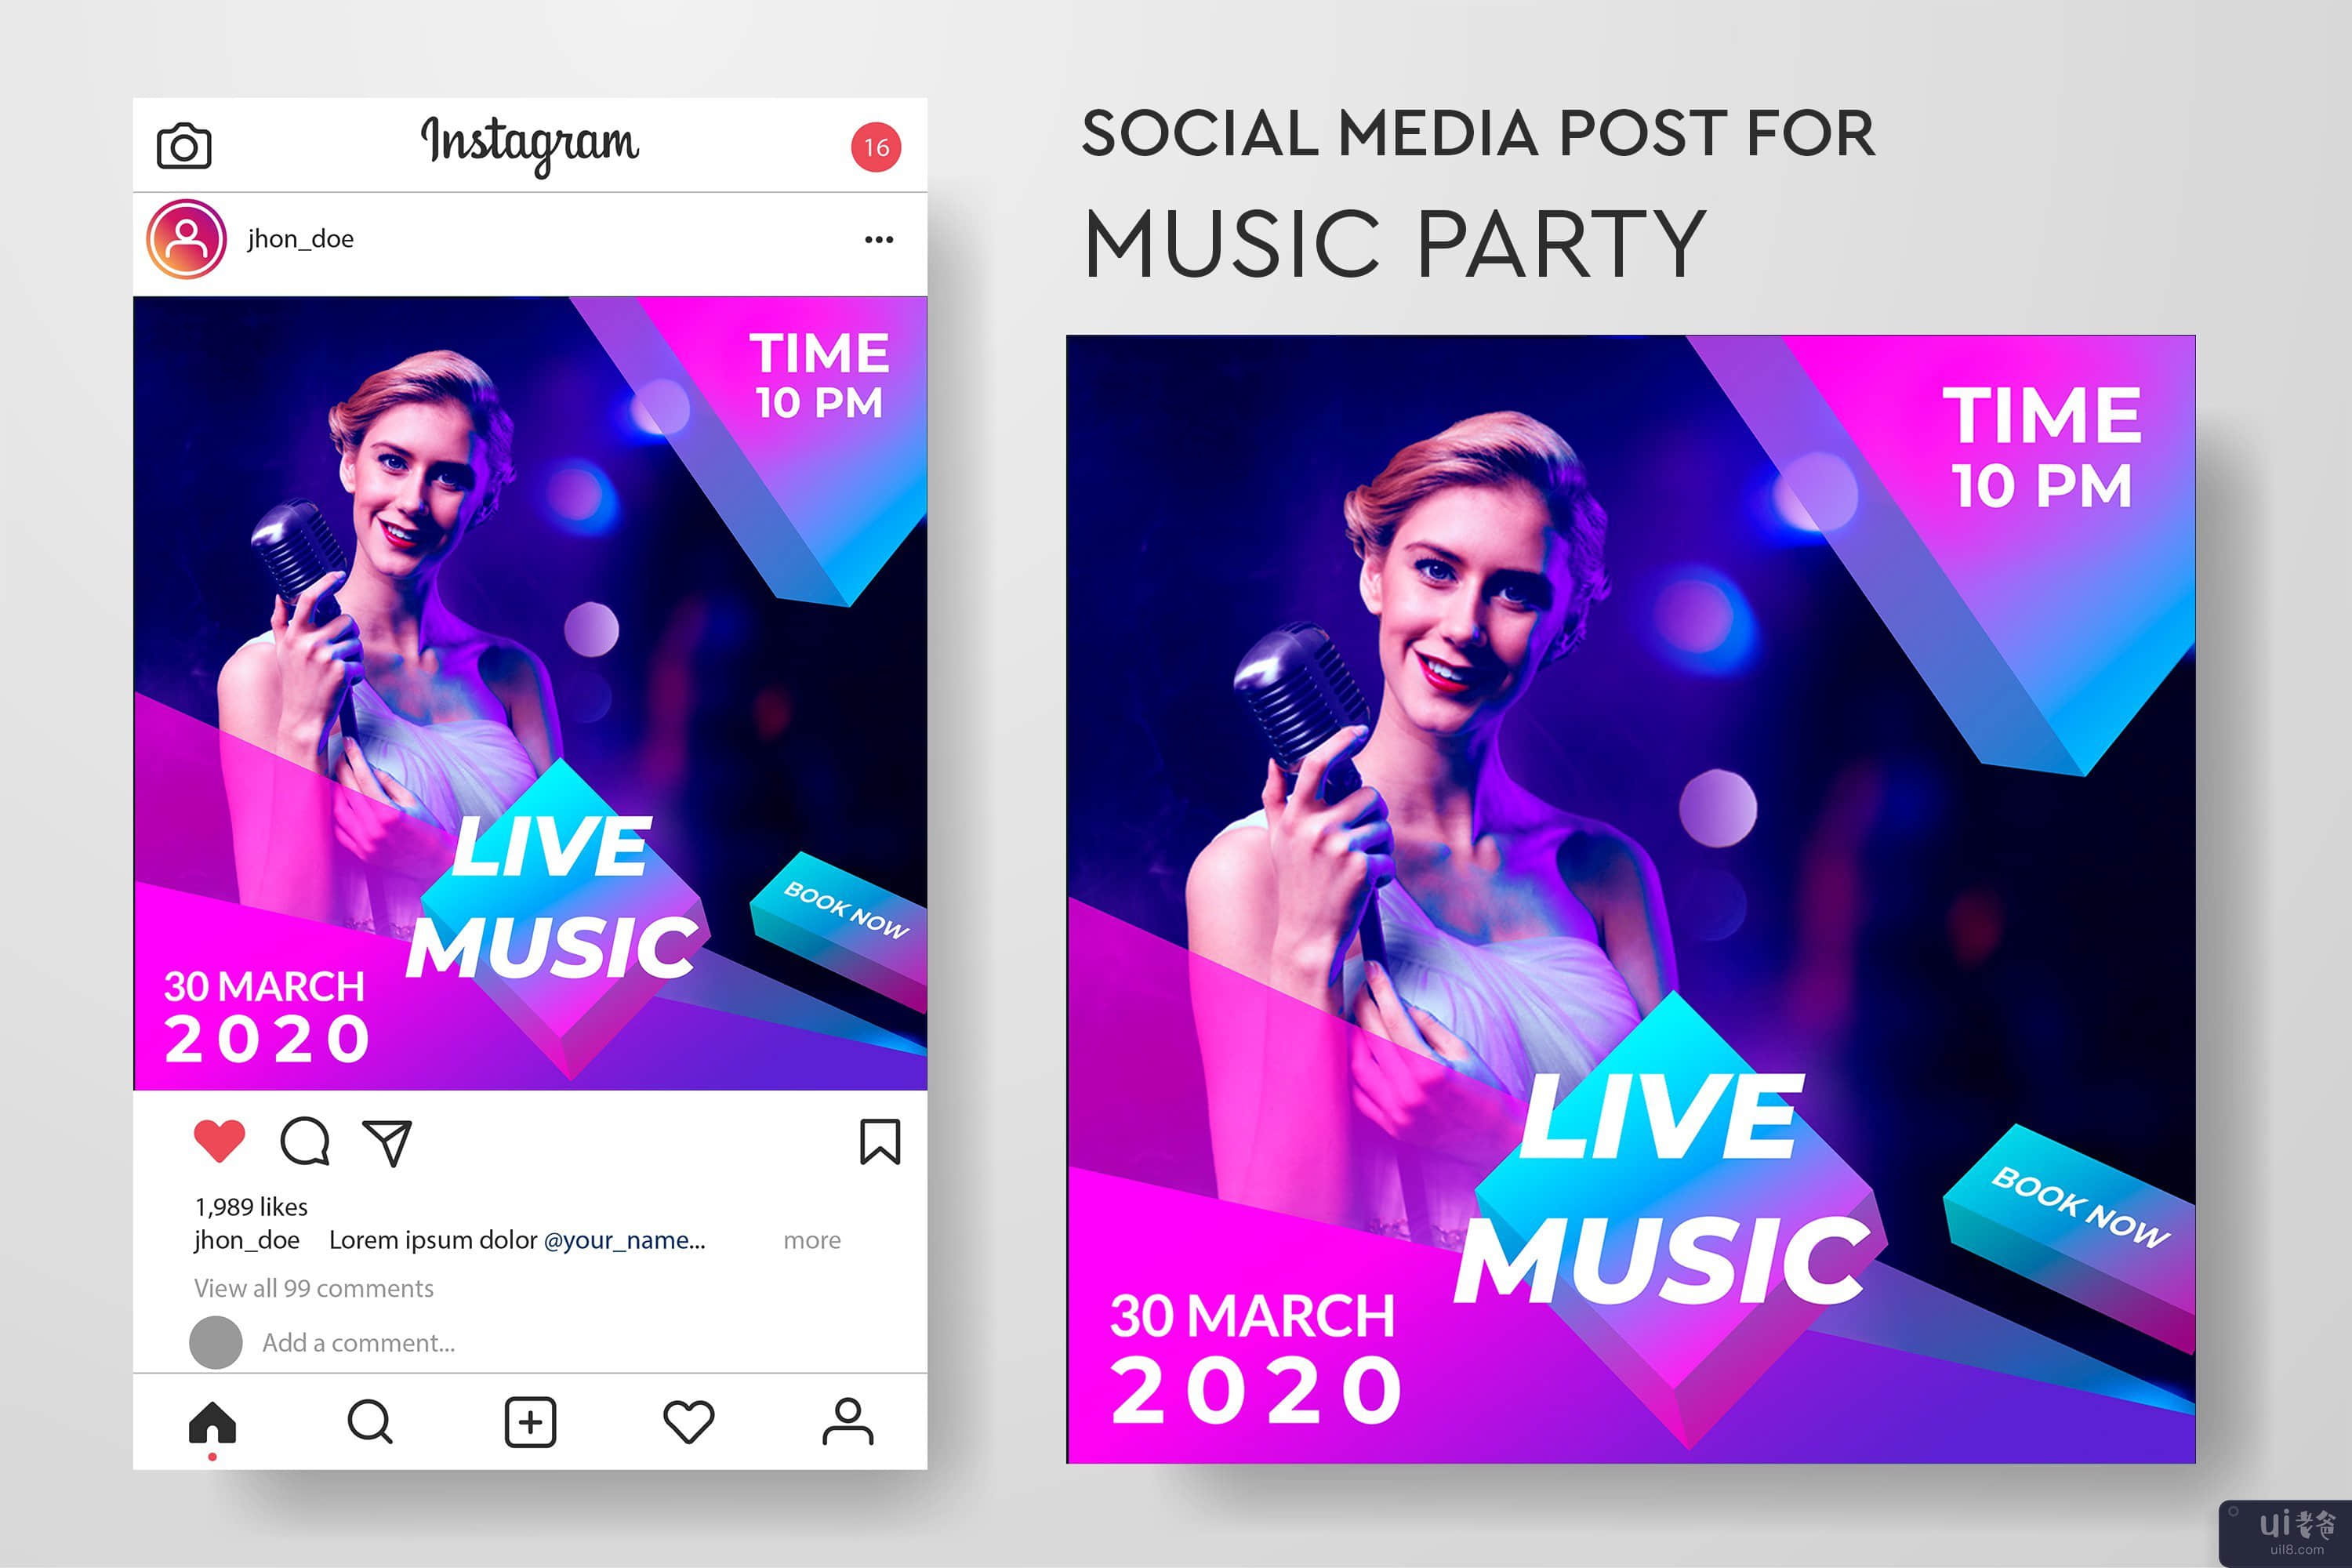 音乐派对社交媒体帖子合集(Music party social media post collection)插图1